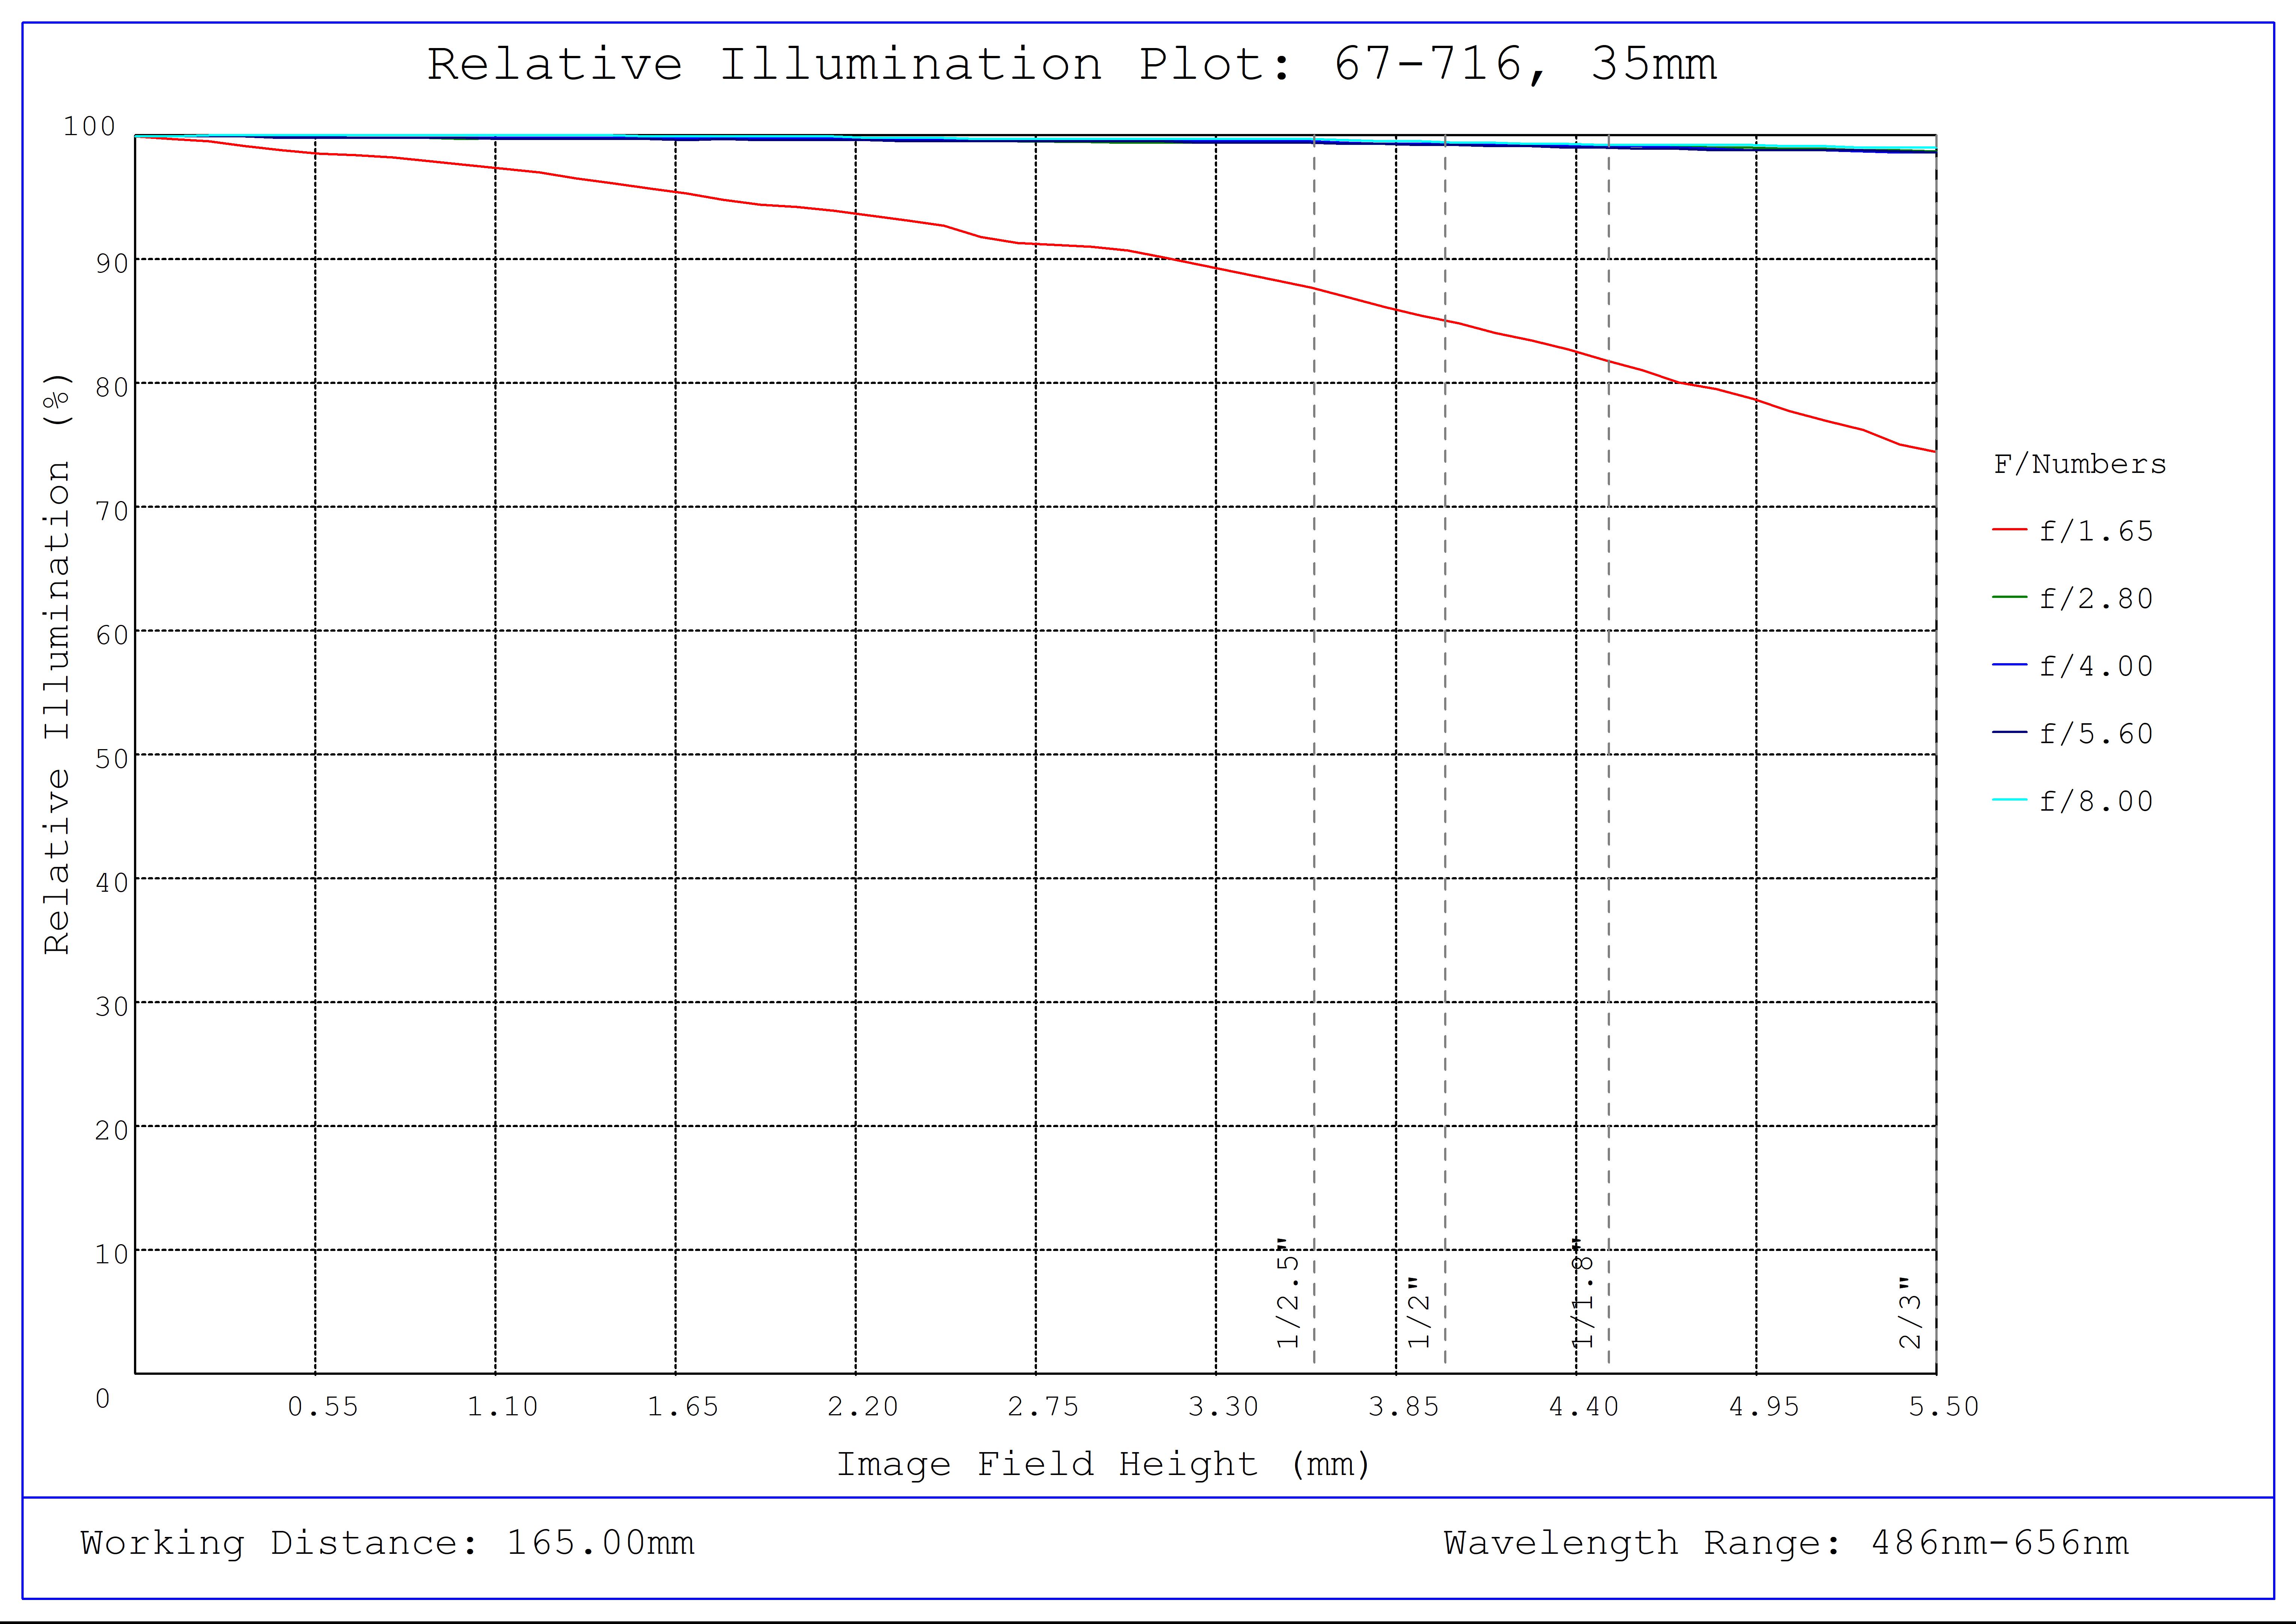 #67-716, 35mm C VIS-NIR Series Fixed Focal Length Lens, Relative Illumination Plot